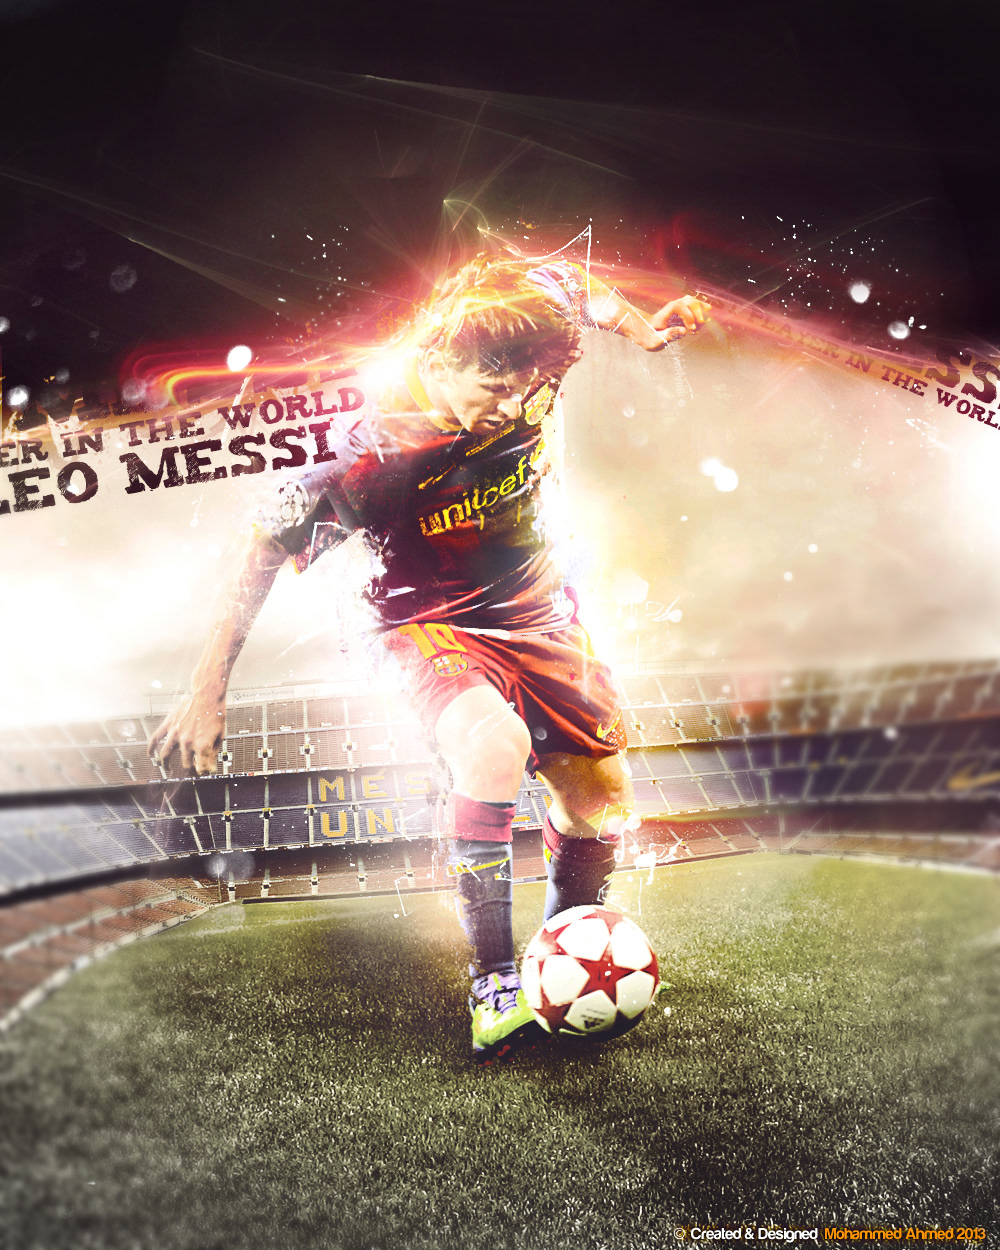 Leo Messi messi barcelona Real Madrid cristiano ronaldo Neymar xavi bale Pirlo football camp nou lional messi uefa